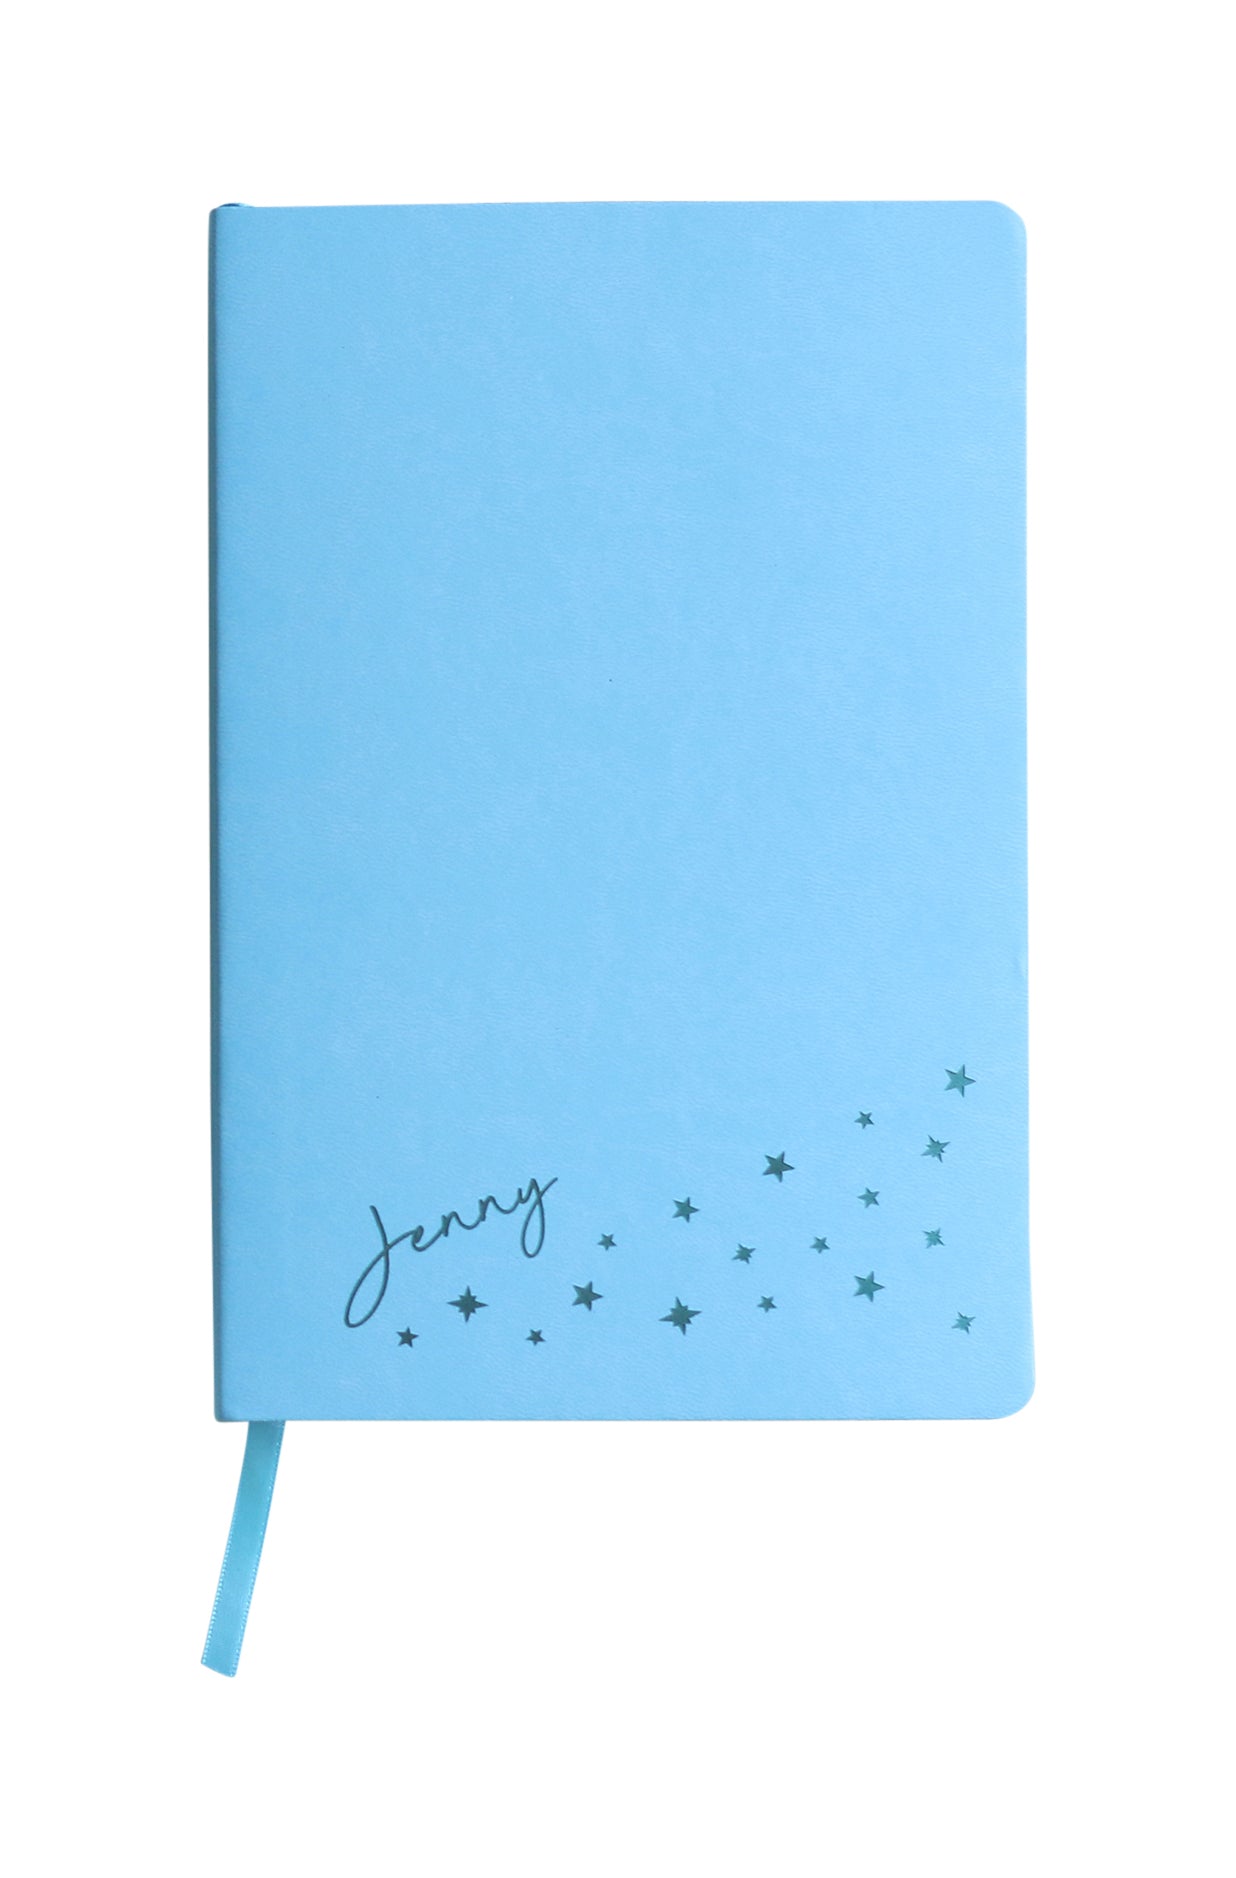 Name Among Stars Personalised Luxury Notebook Journal